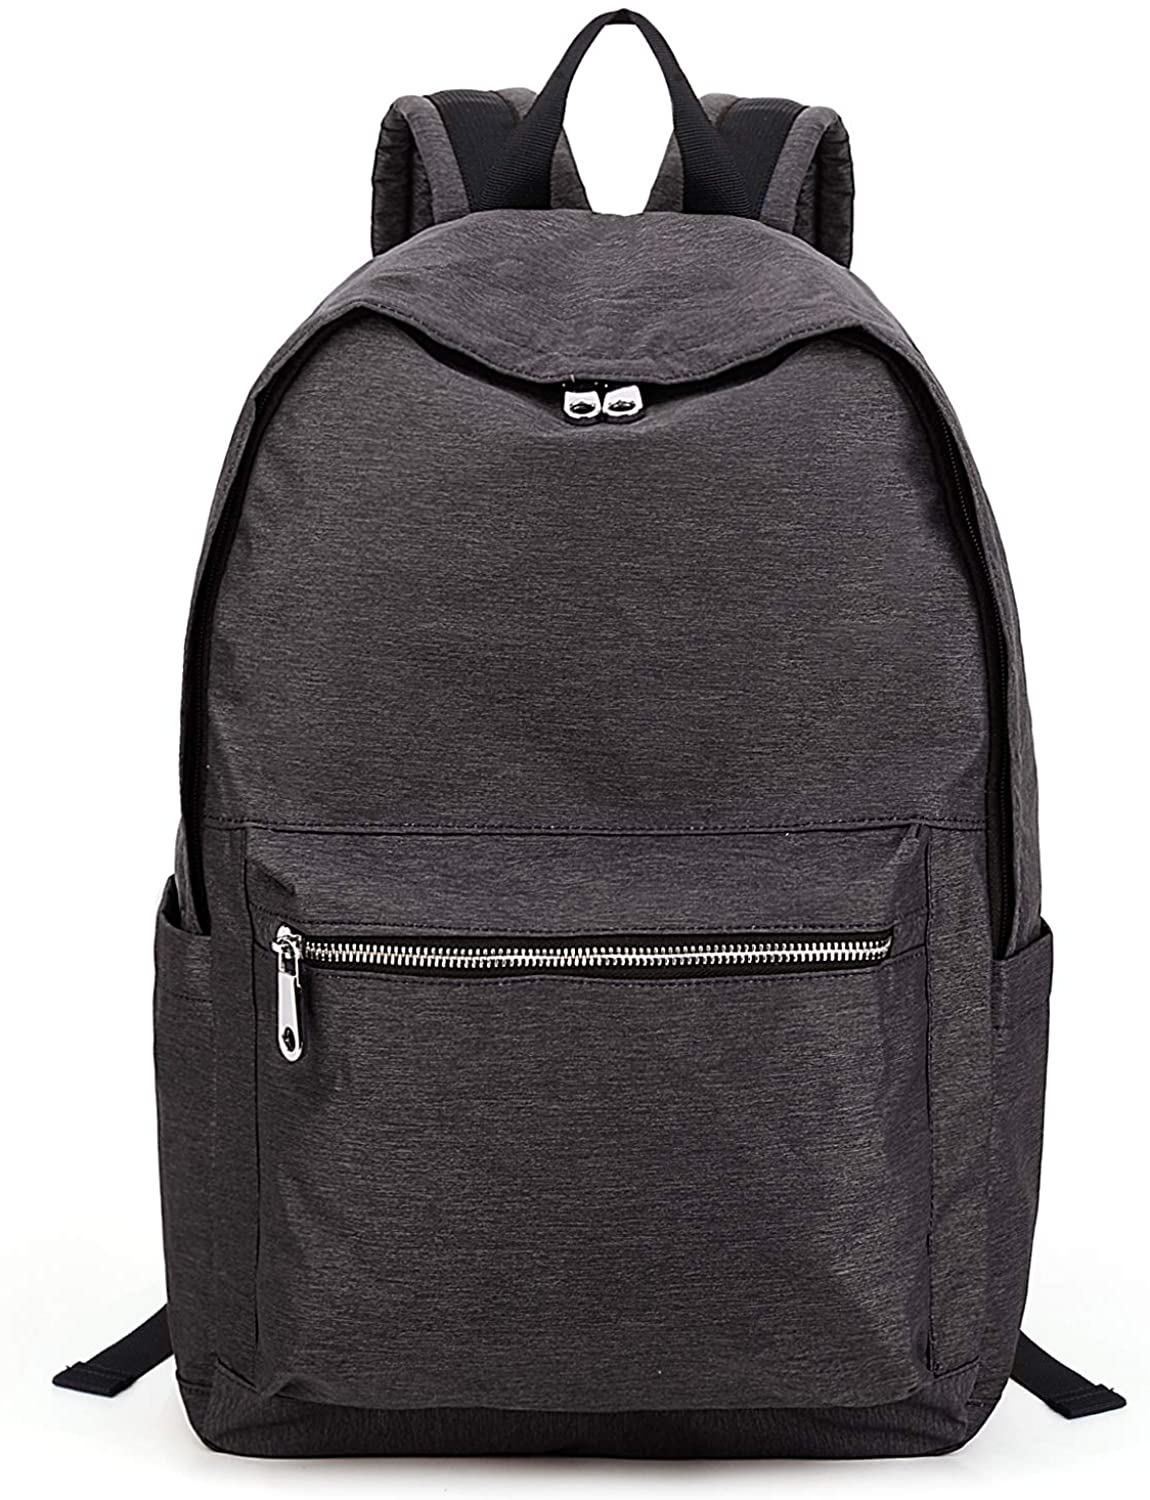 UTO Unisex School Bag Travel Backpack Water Resistant Lightweight Nylon ...